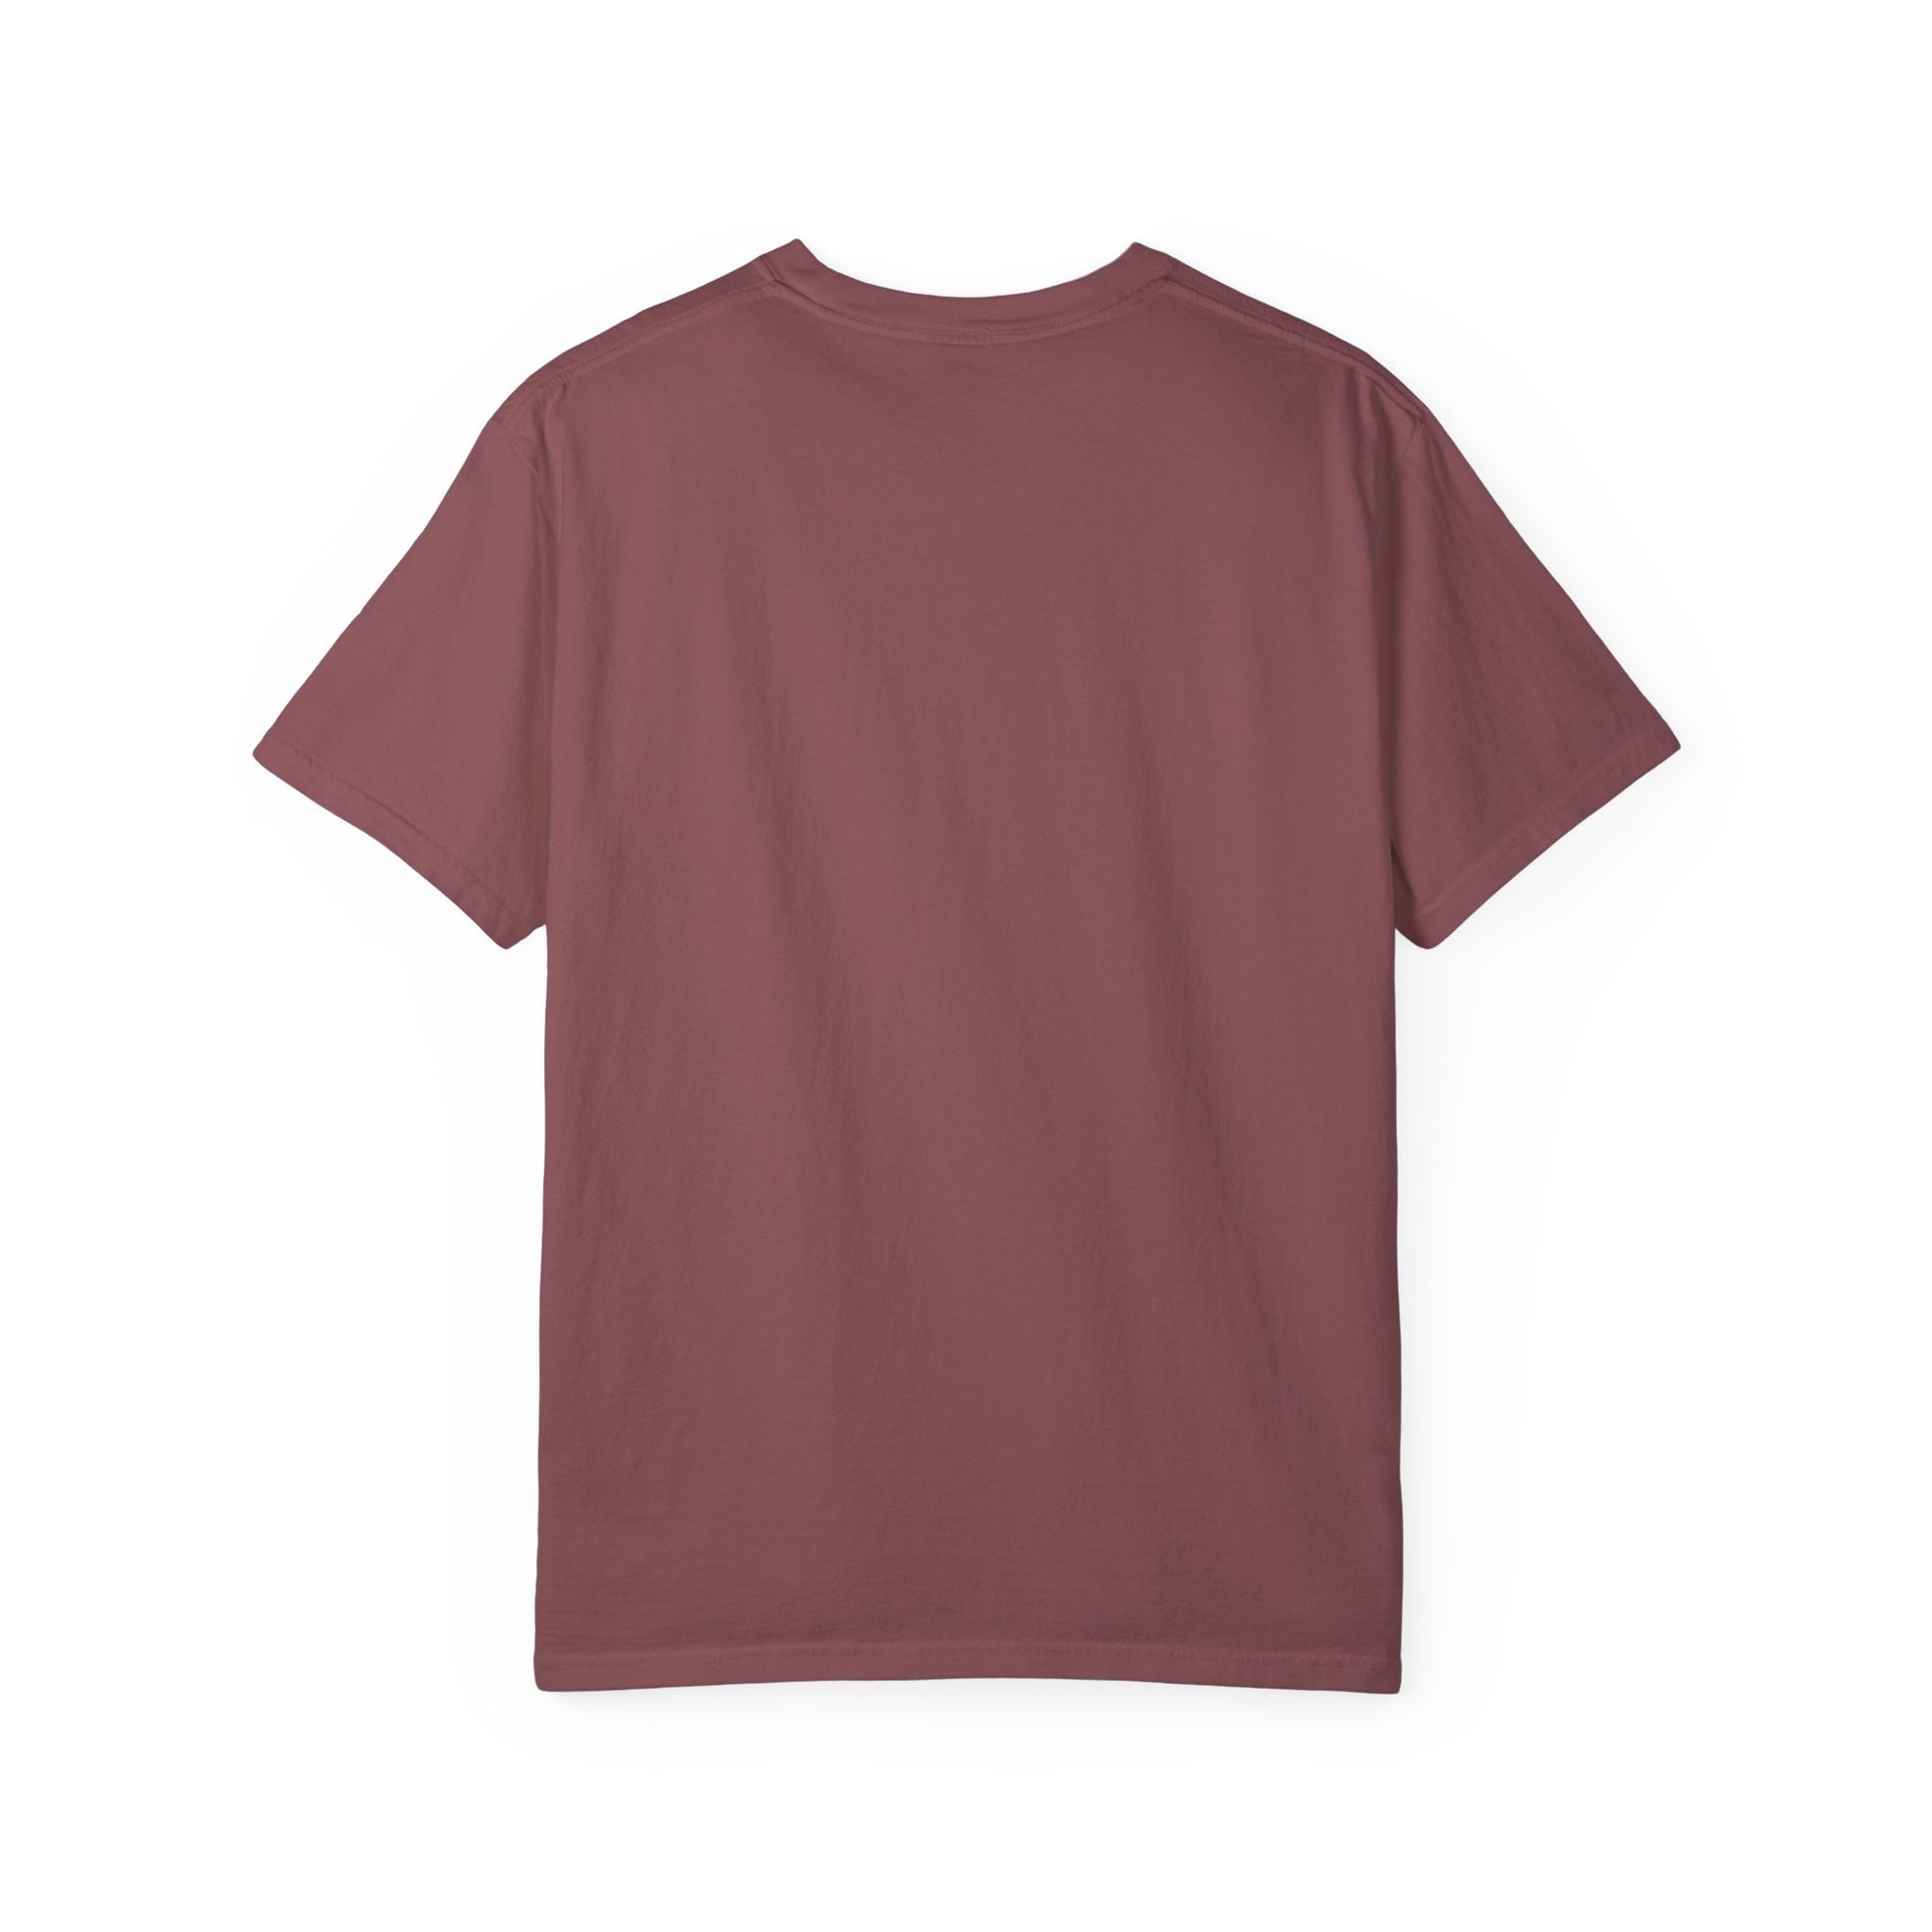 Hip Hop Teddy Bear Graphic Unisex Garment-dyed T-shirt Cotton Funny Humorous Graphic Soft Premium Unisex Men Women Brick T-shirt Birthday Gift-28